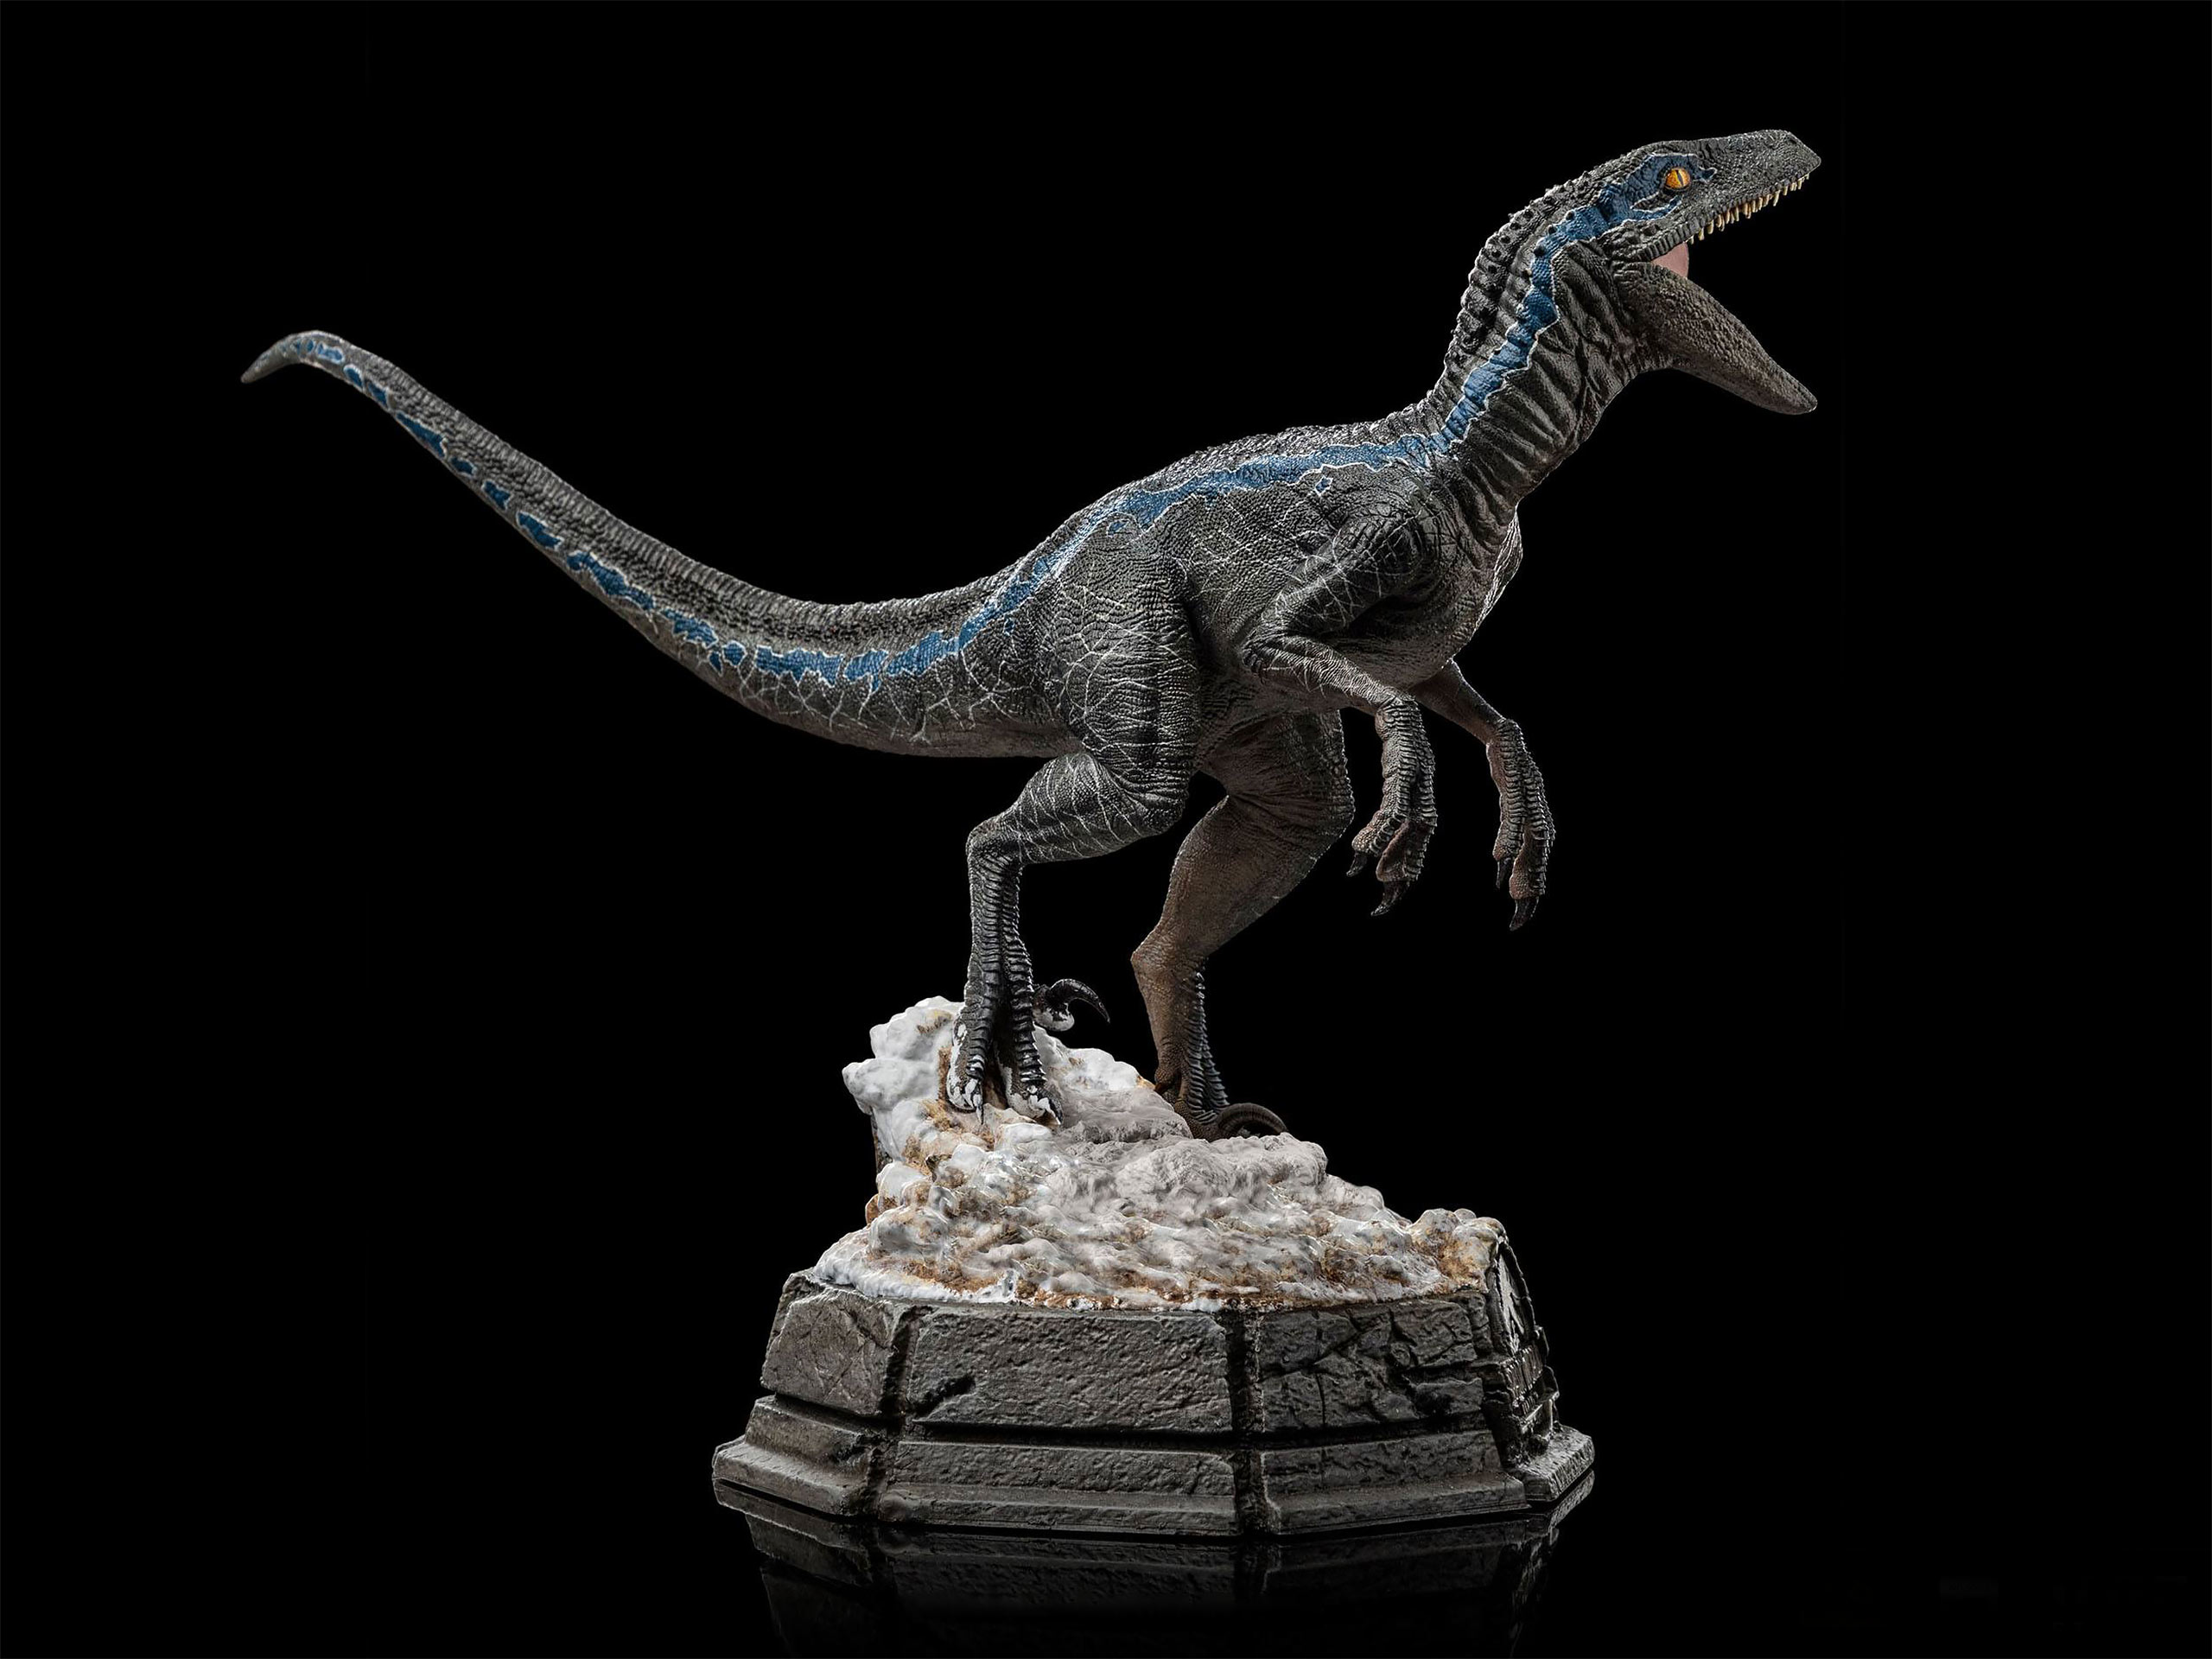 Jurassic World - Blue Art Scale Deluxe Standbeeld